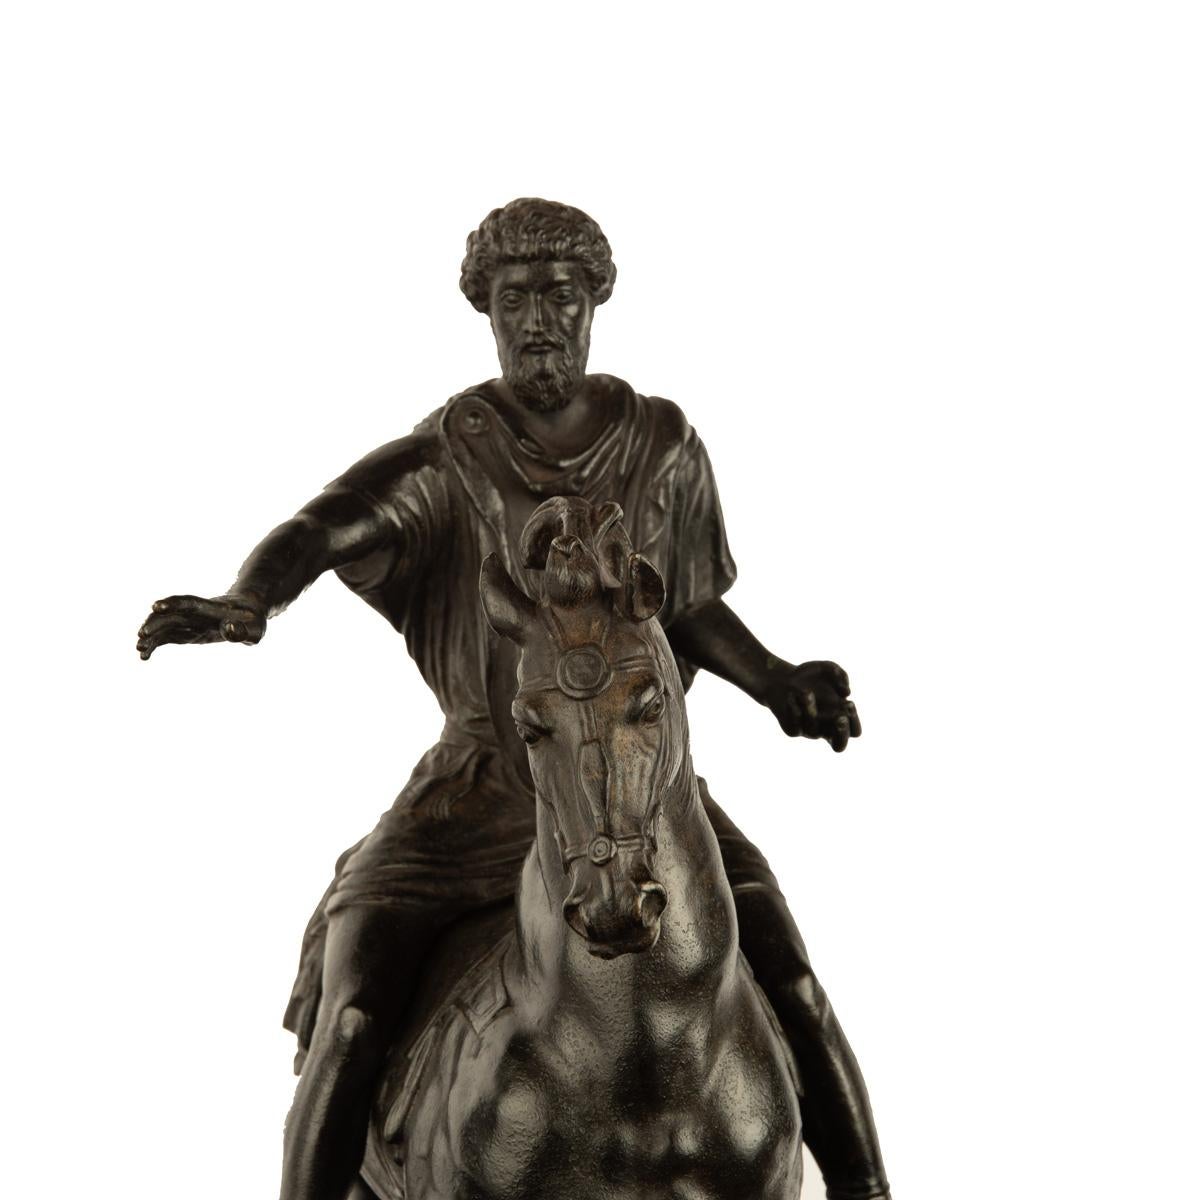 A Grand Tour equestrian bronze of Marcus Aurelius, after Hopfgarten 2